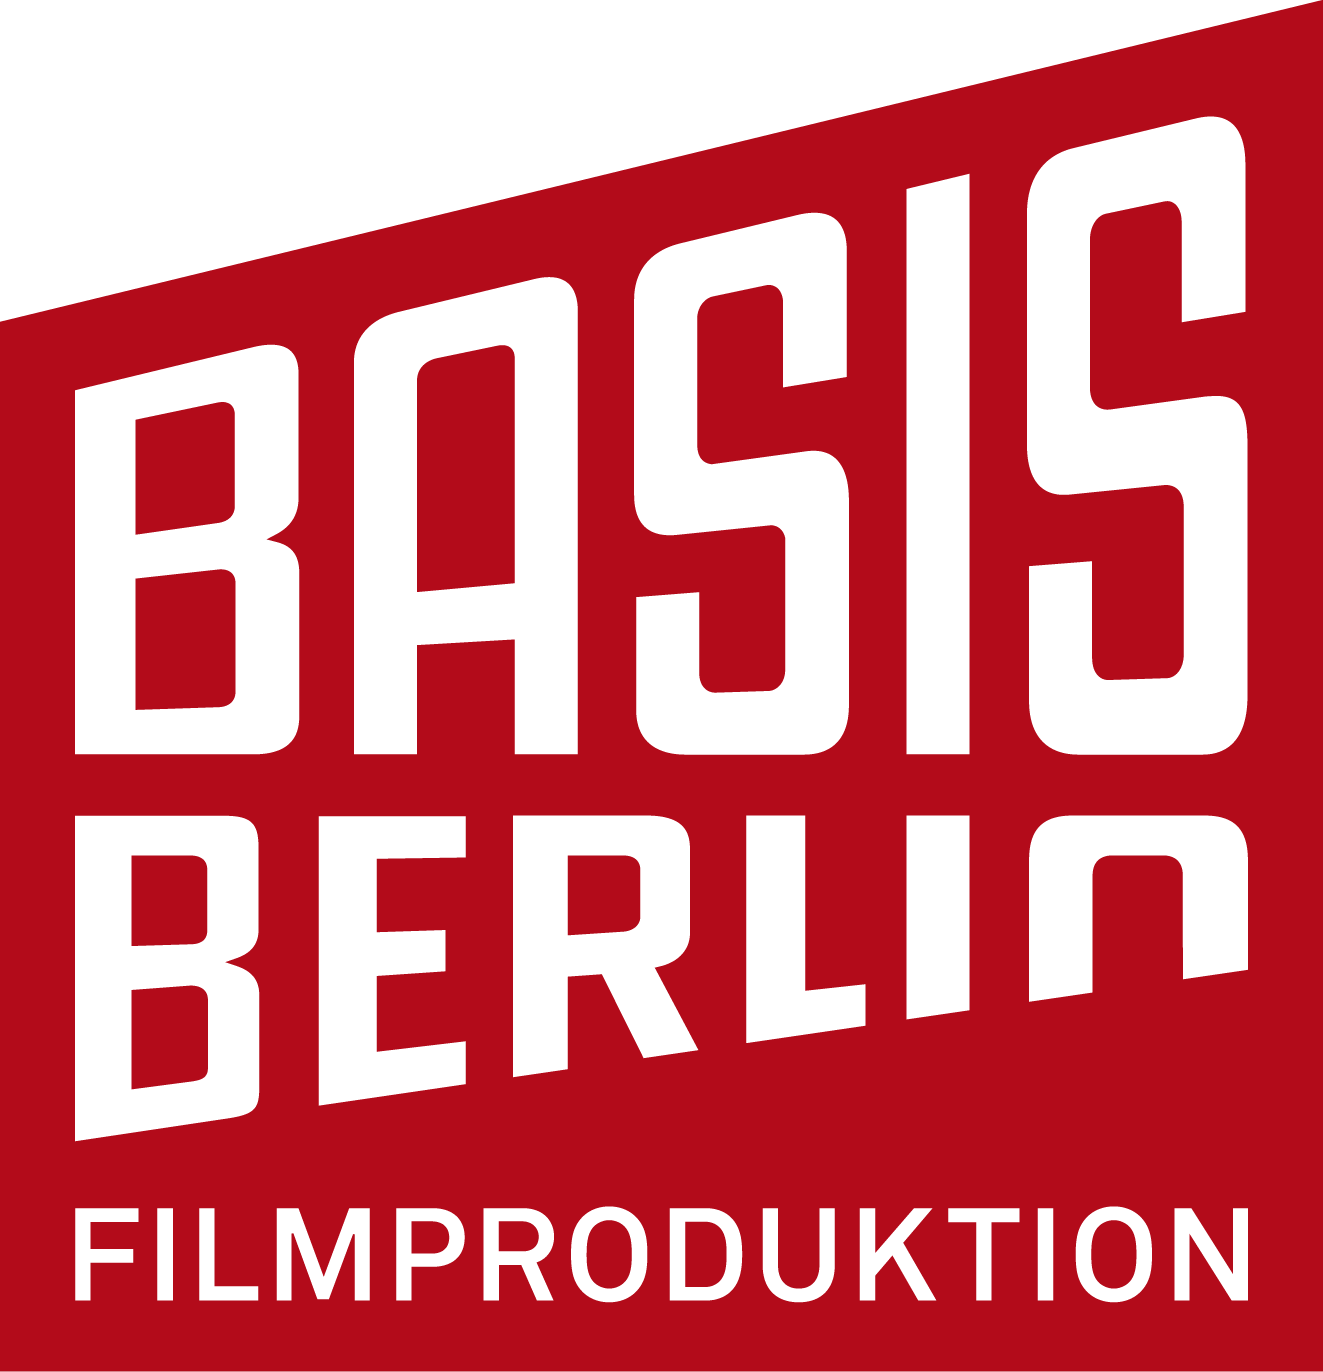 BASIS BERLIN Filmproduktion